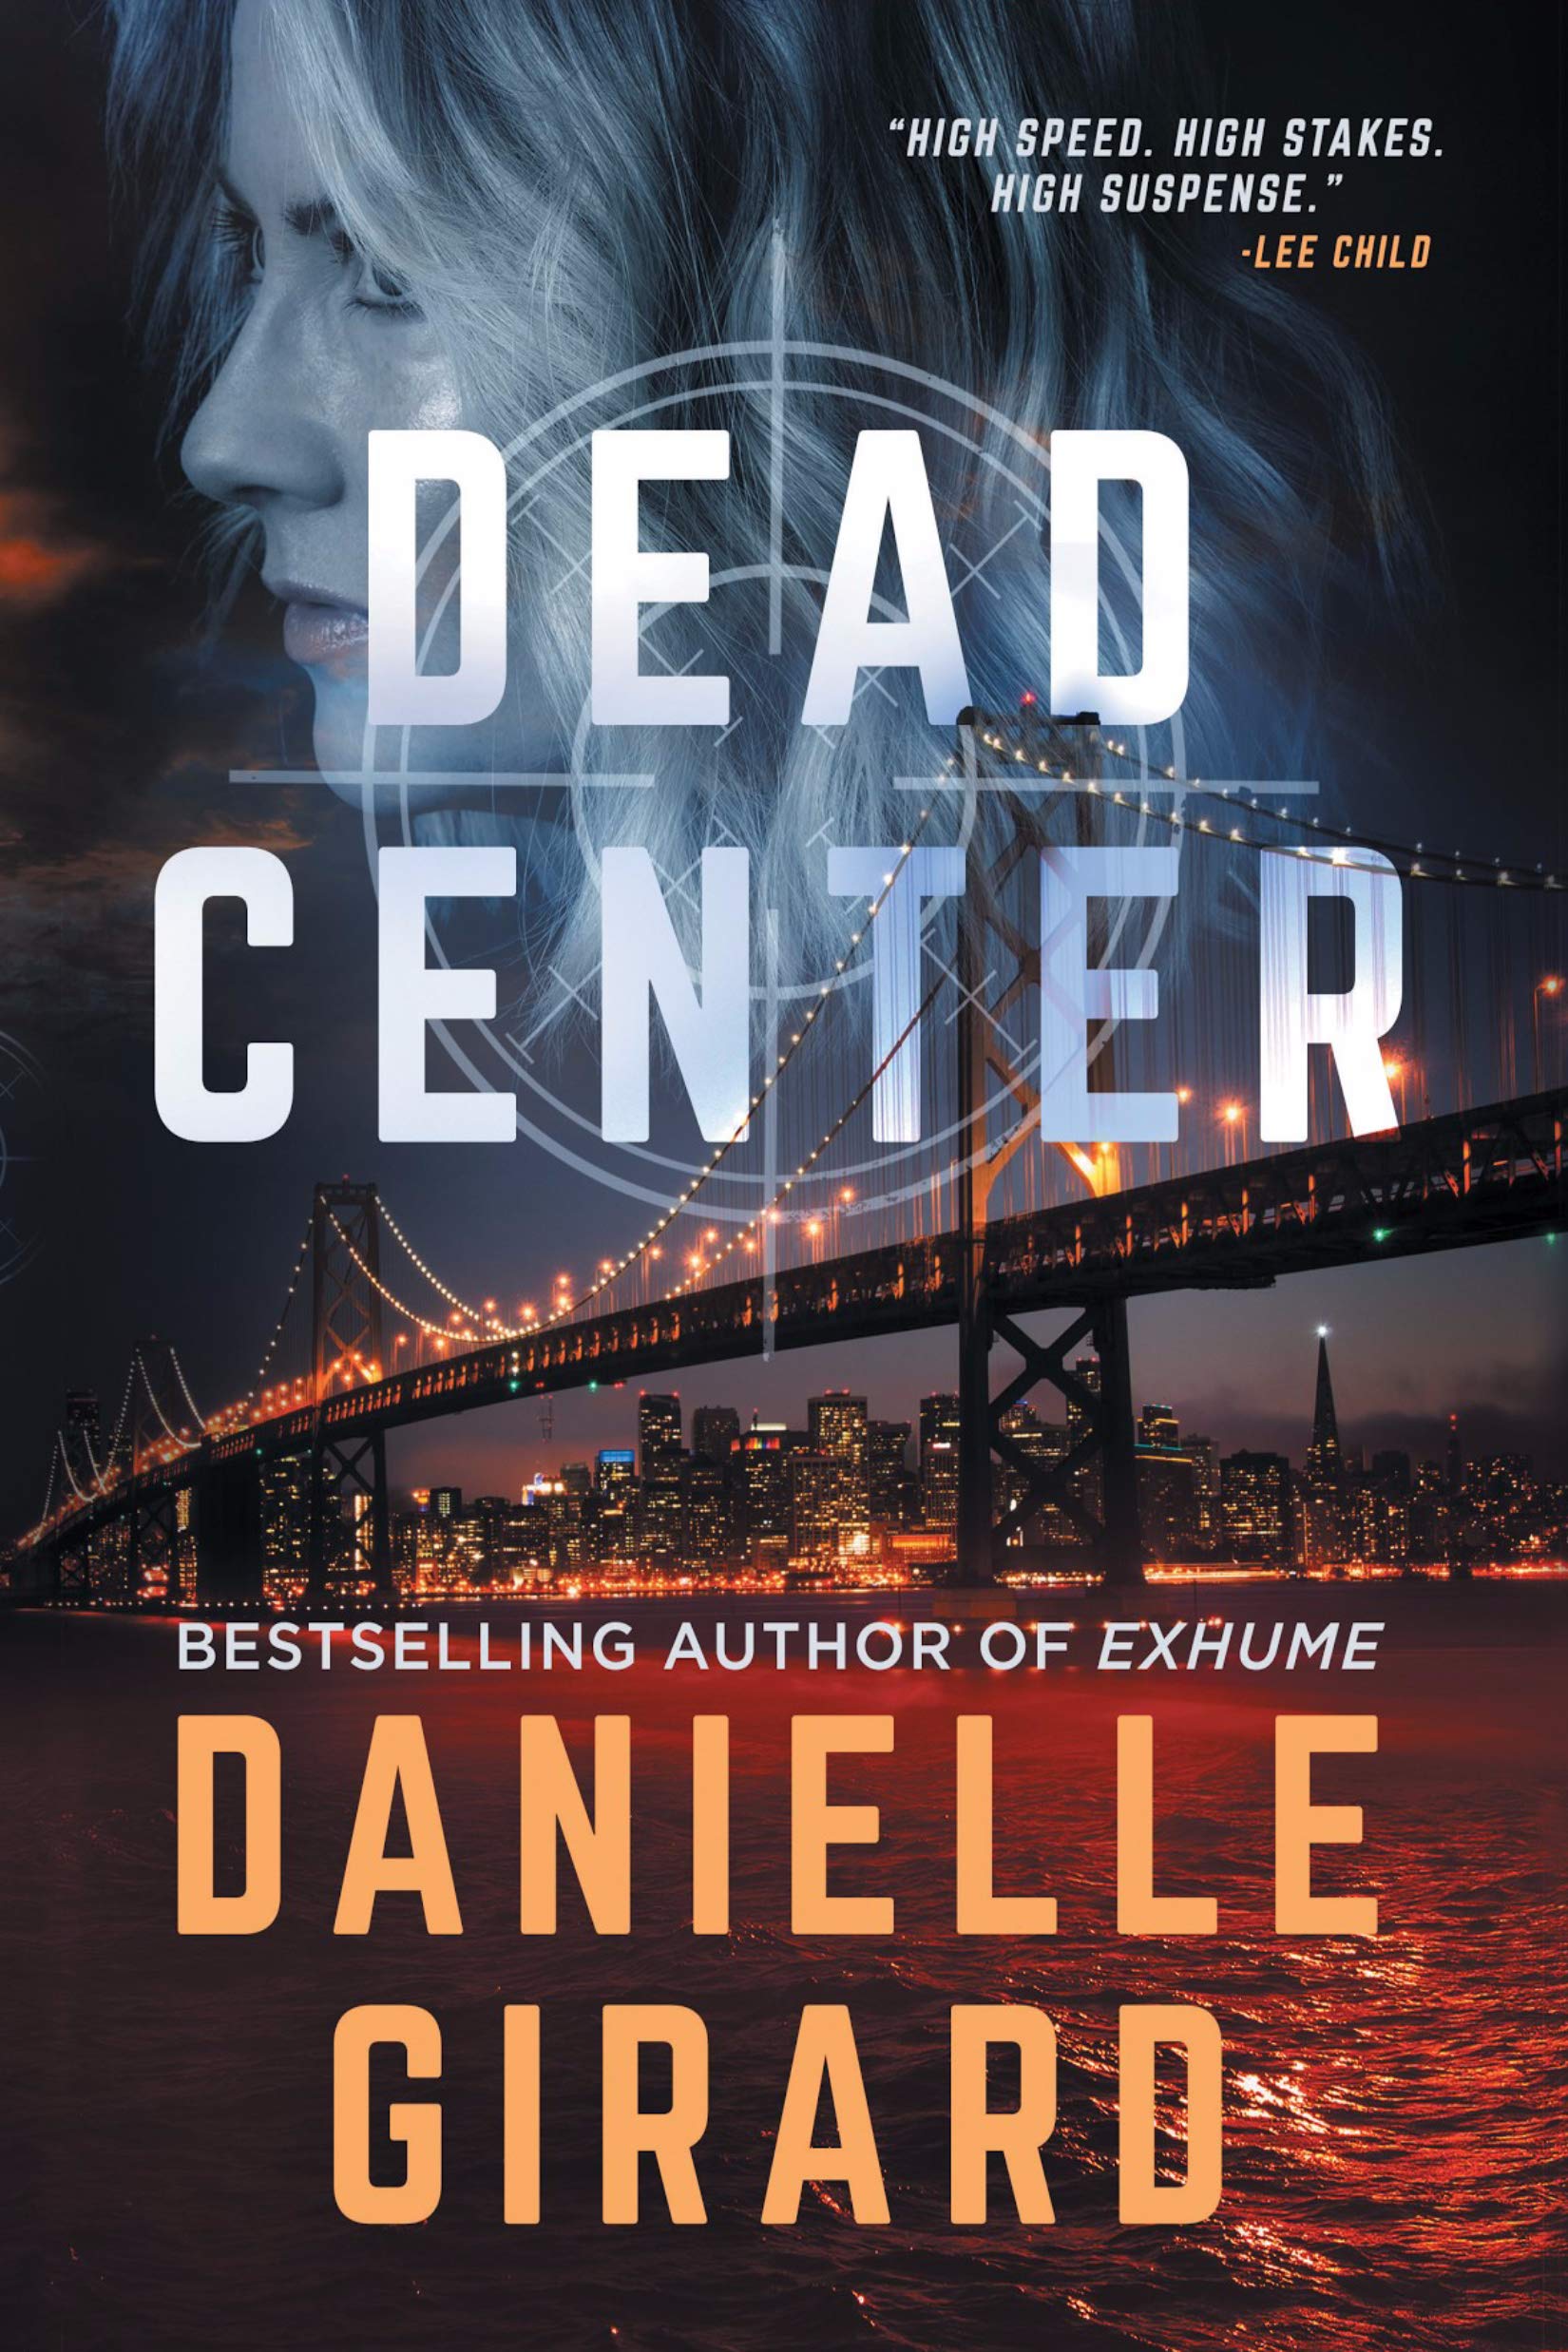 Dead Center: A Gripping Suspense Thriller (The Rookie Club Book 1)